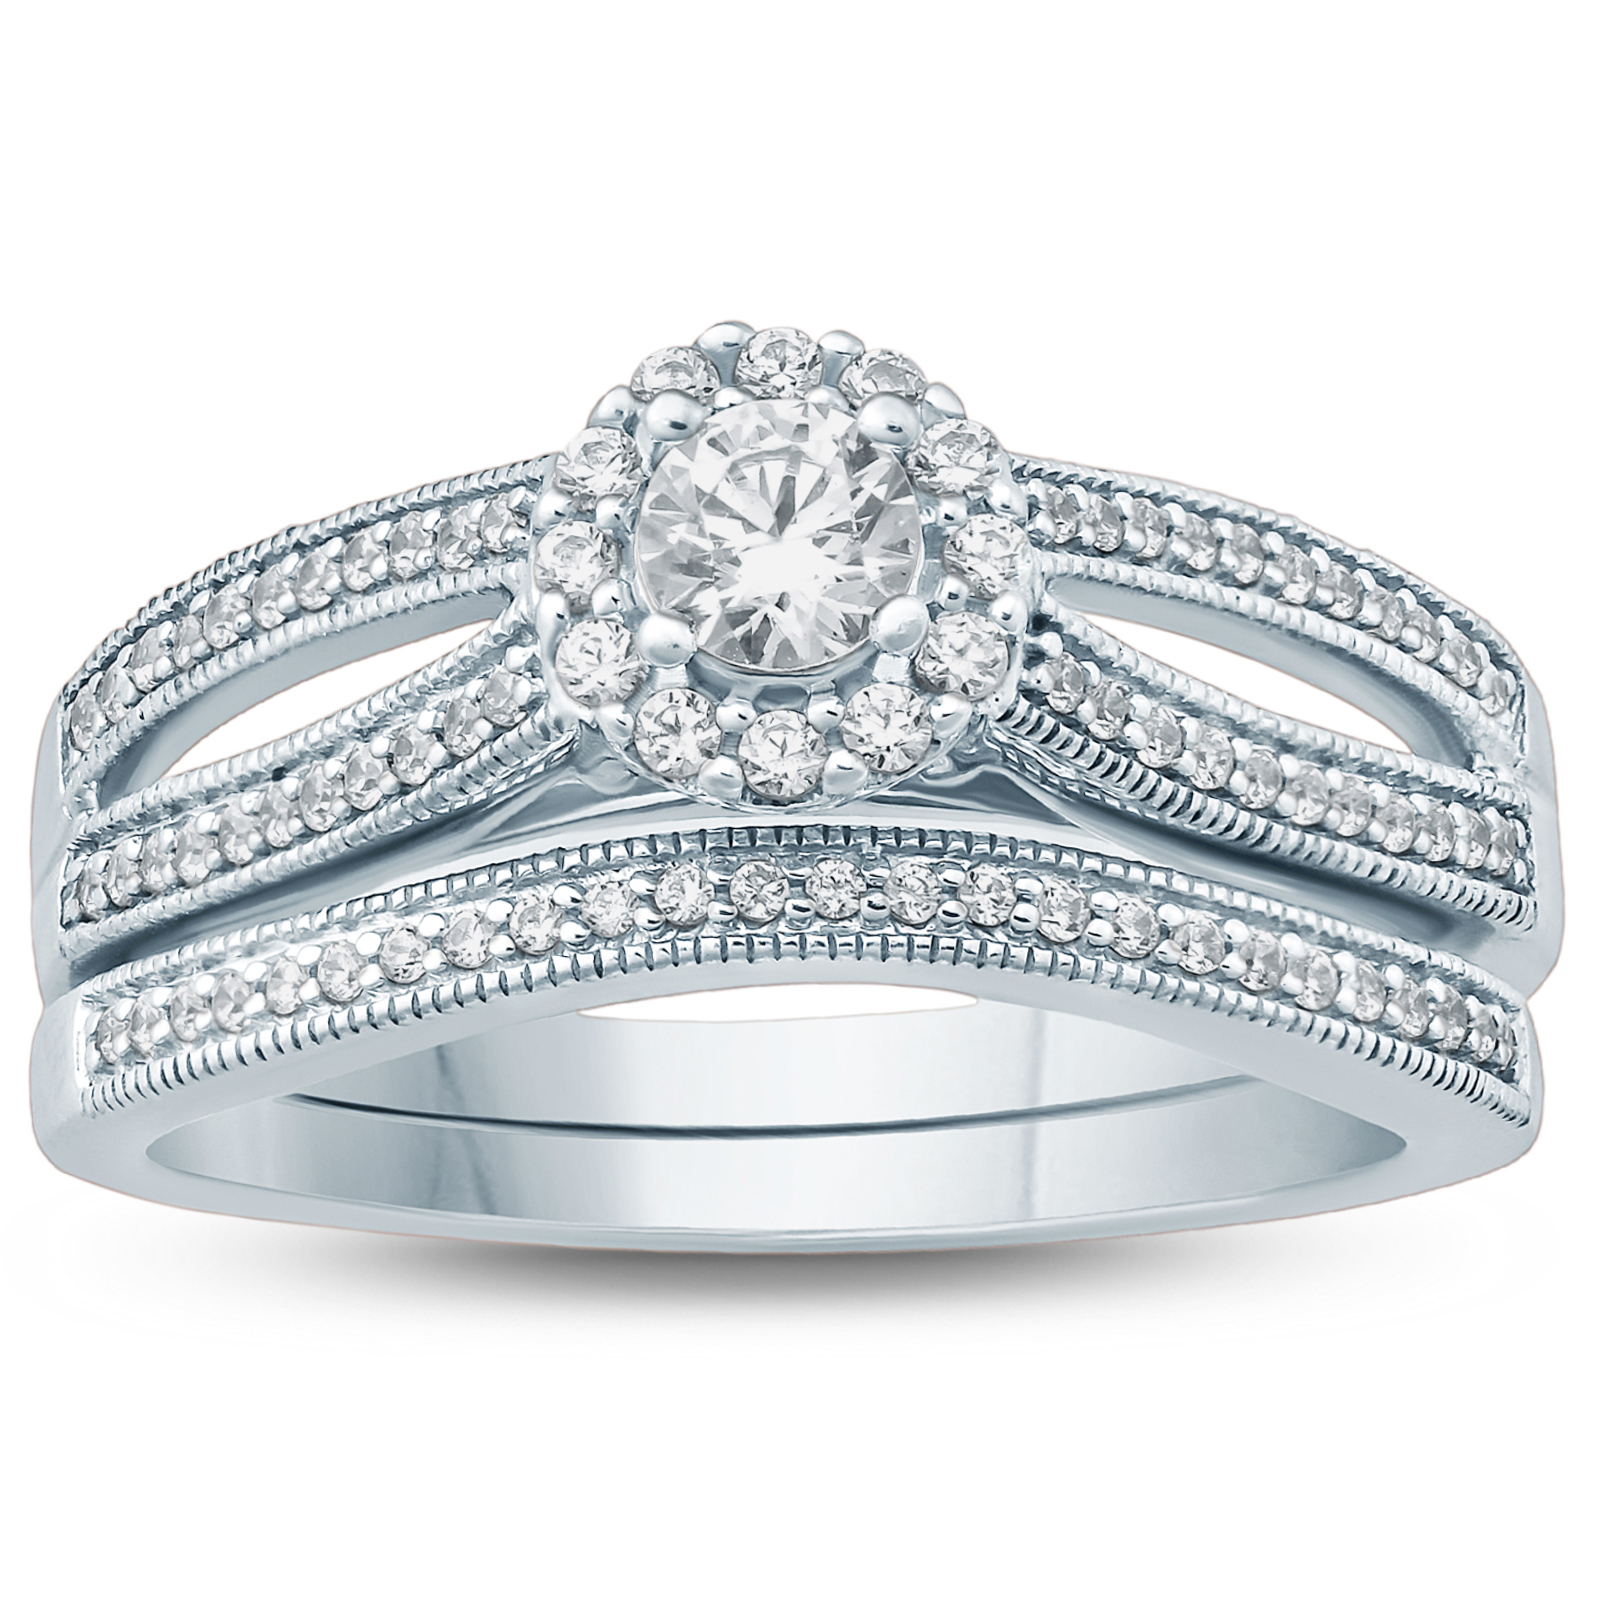 1/2 Carat TW Diamond Engagement Ring and Wedding Band Set in 10K White Gold